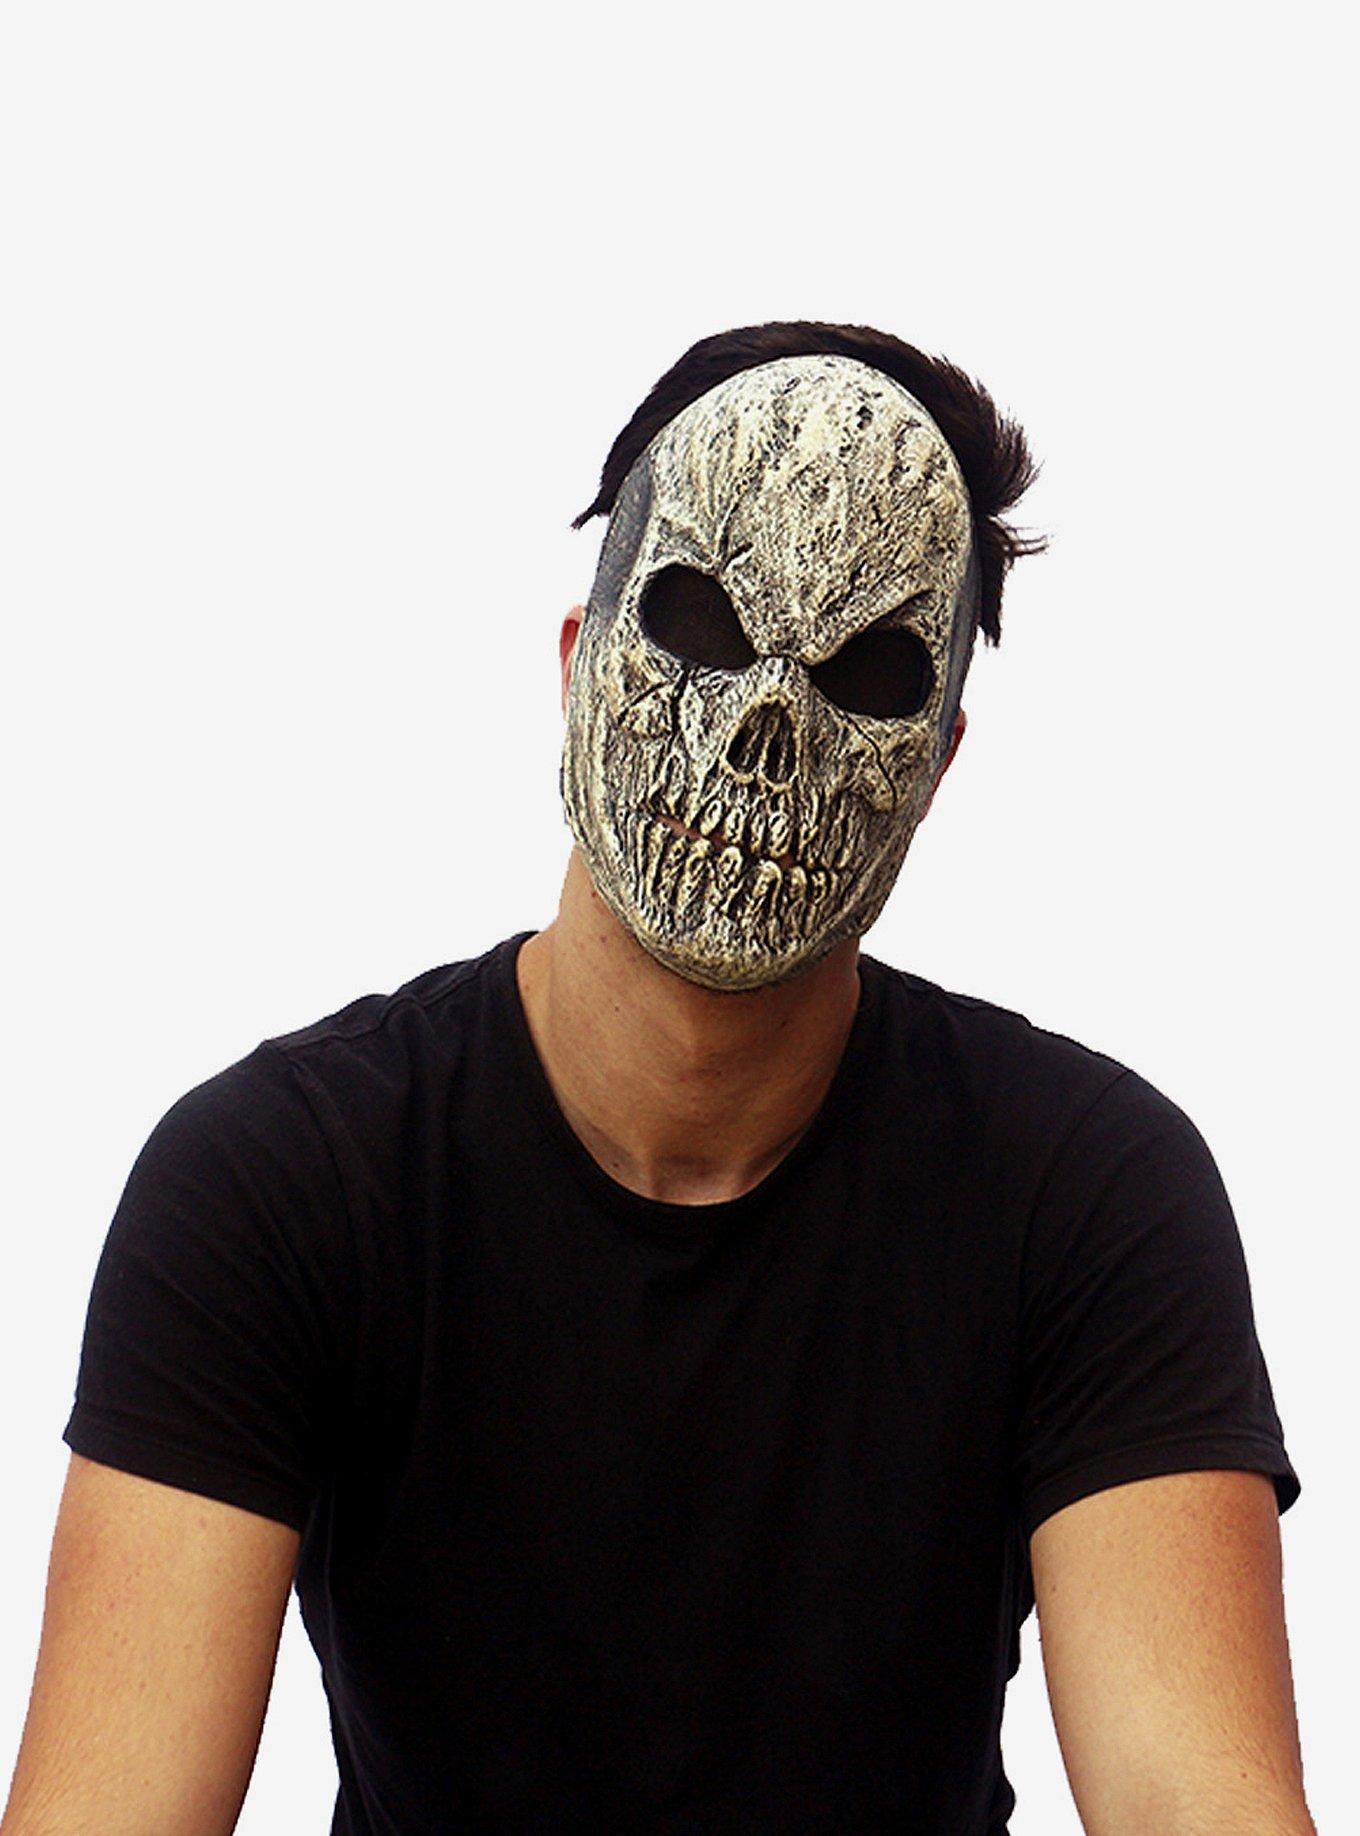 Old Skull Mask